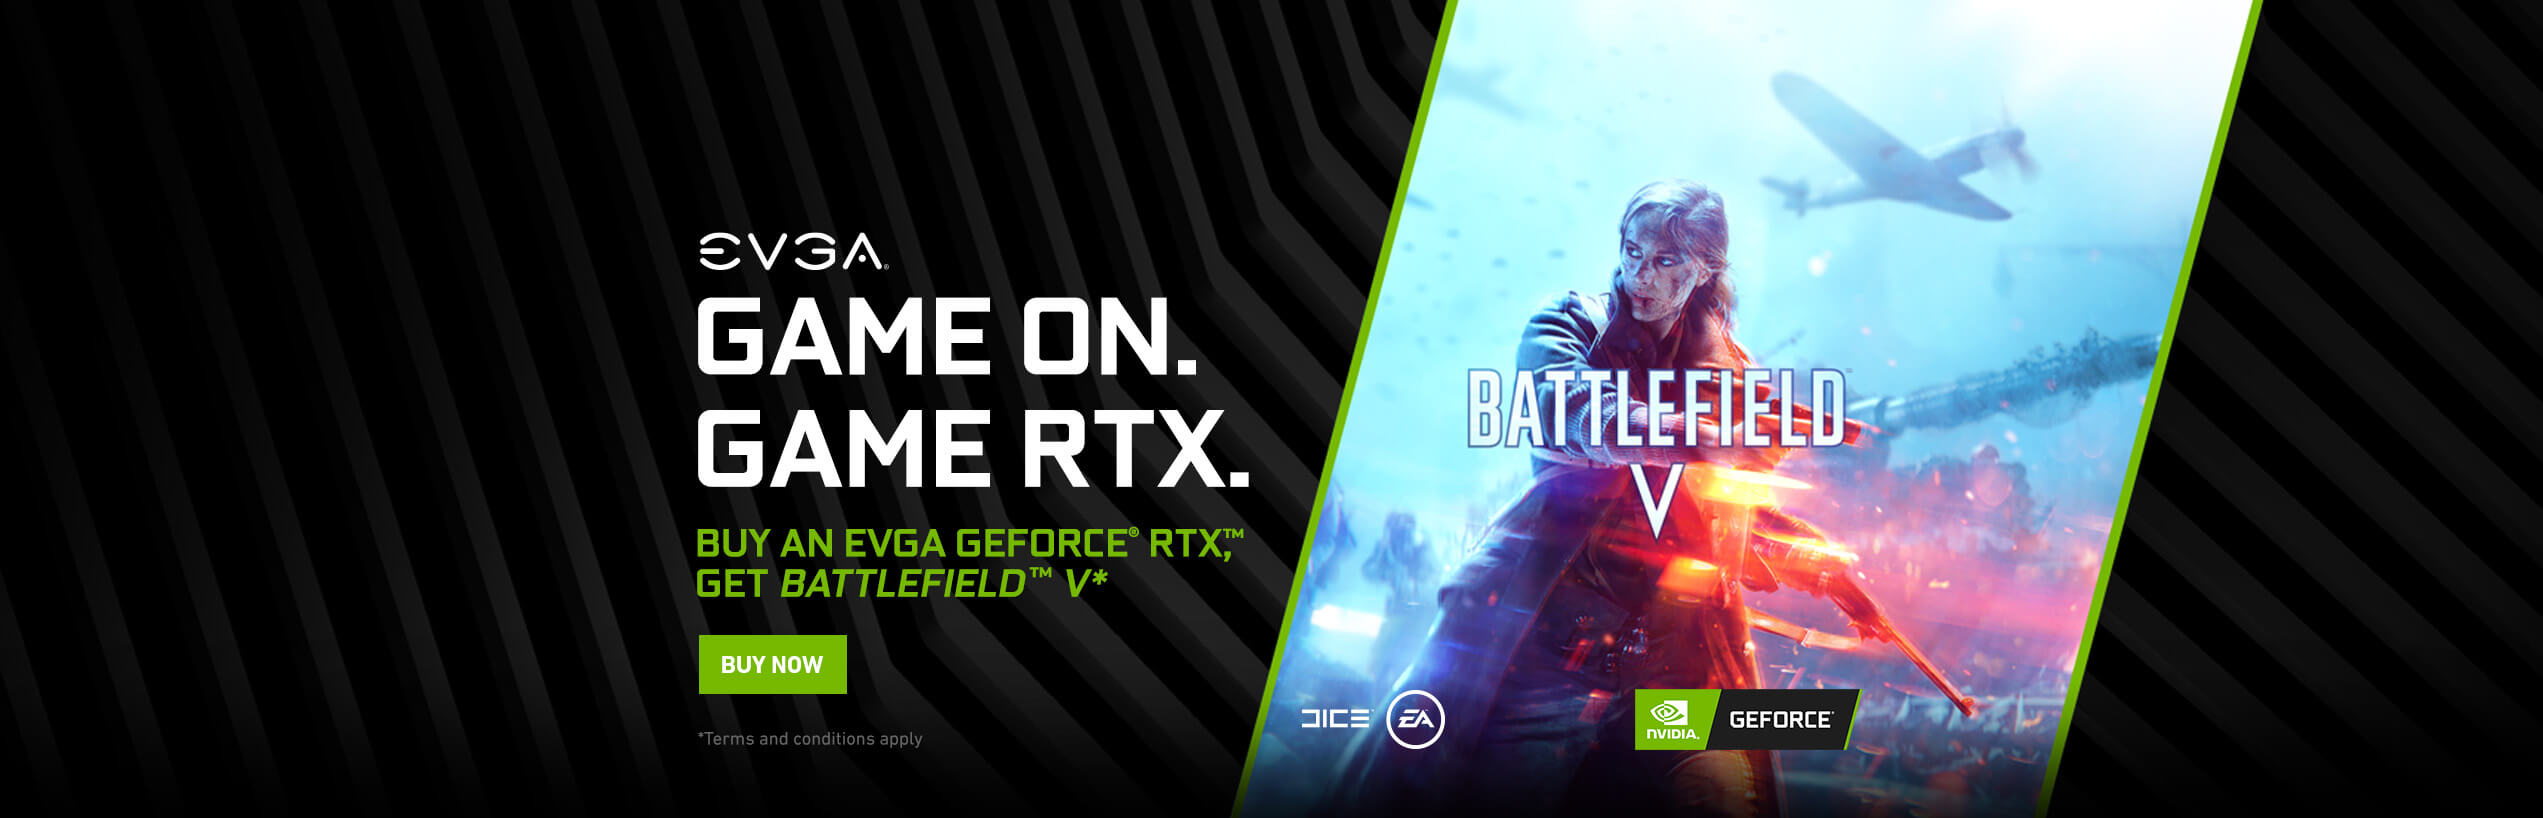 Buy An EVGA GeForce® RTX™ Get Battlefield™ V*